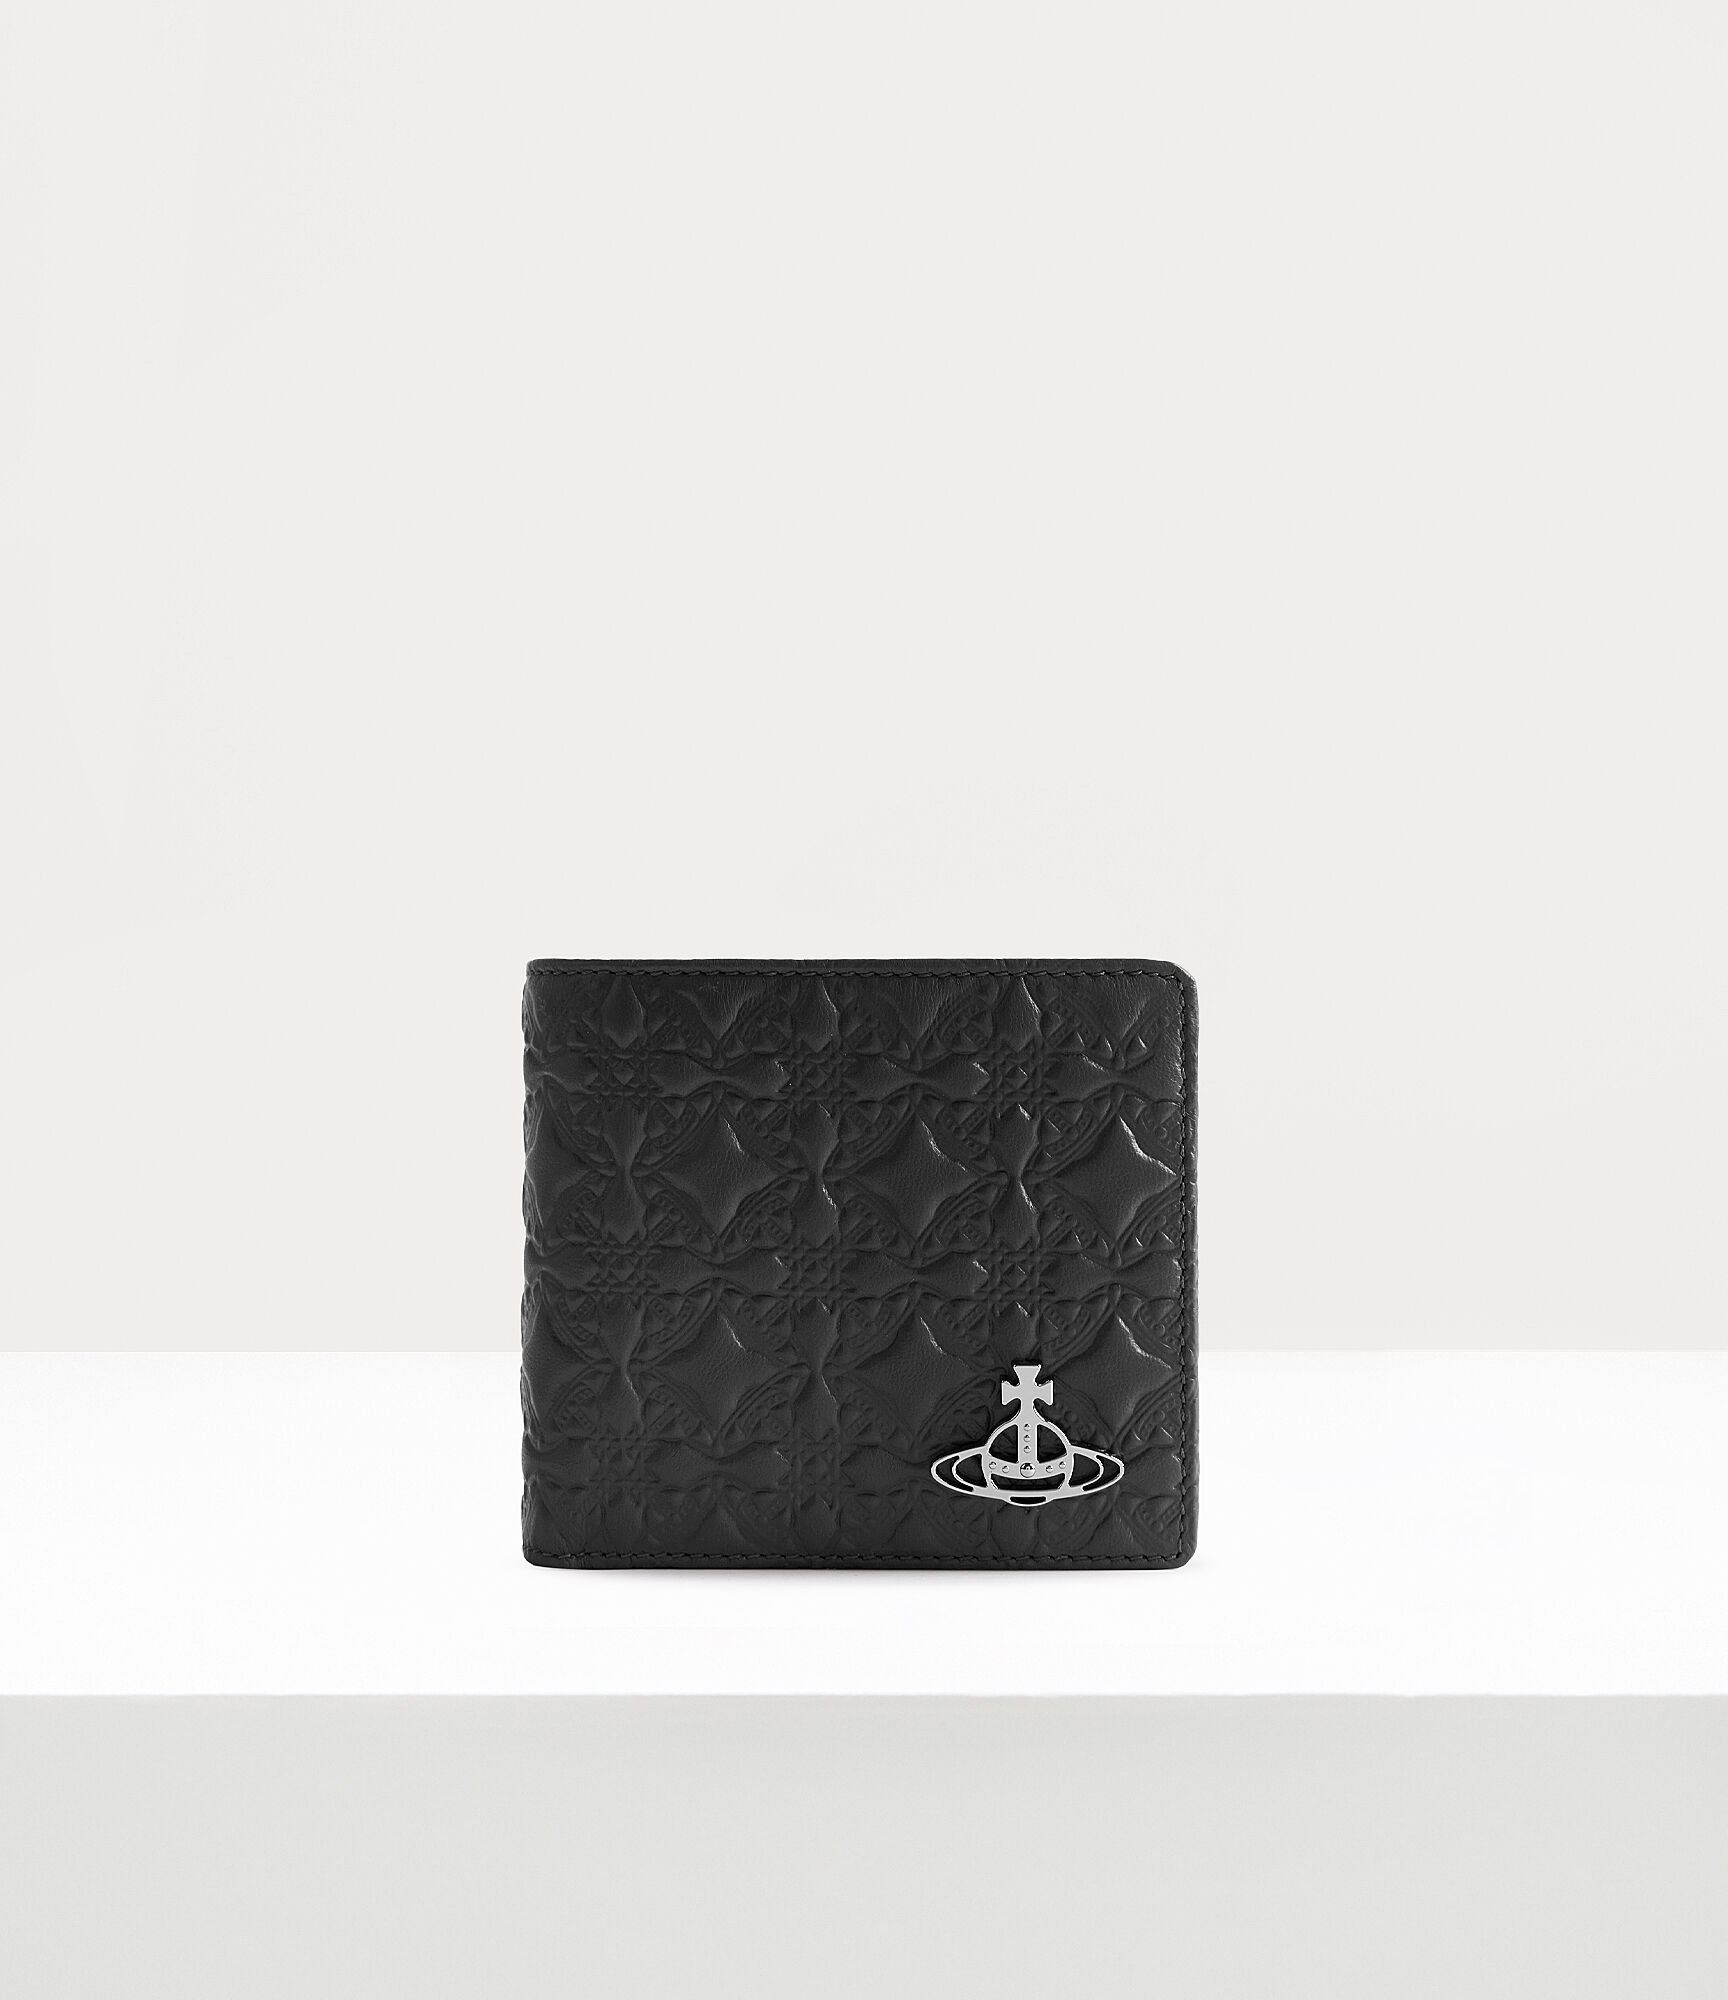 Mens Designer Leather Wallet - Contrast Stitching - Coin Pocket - R507